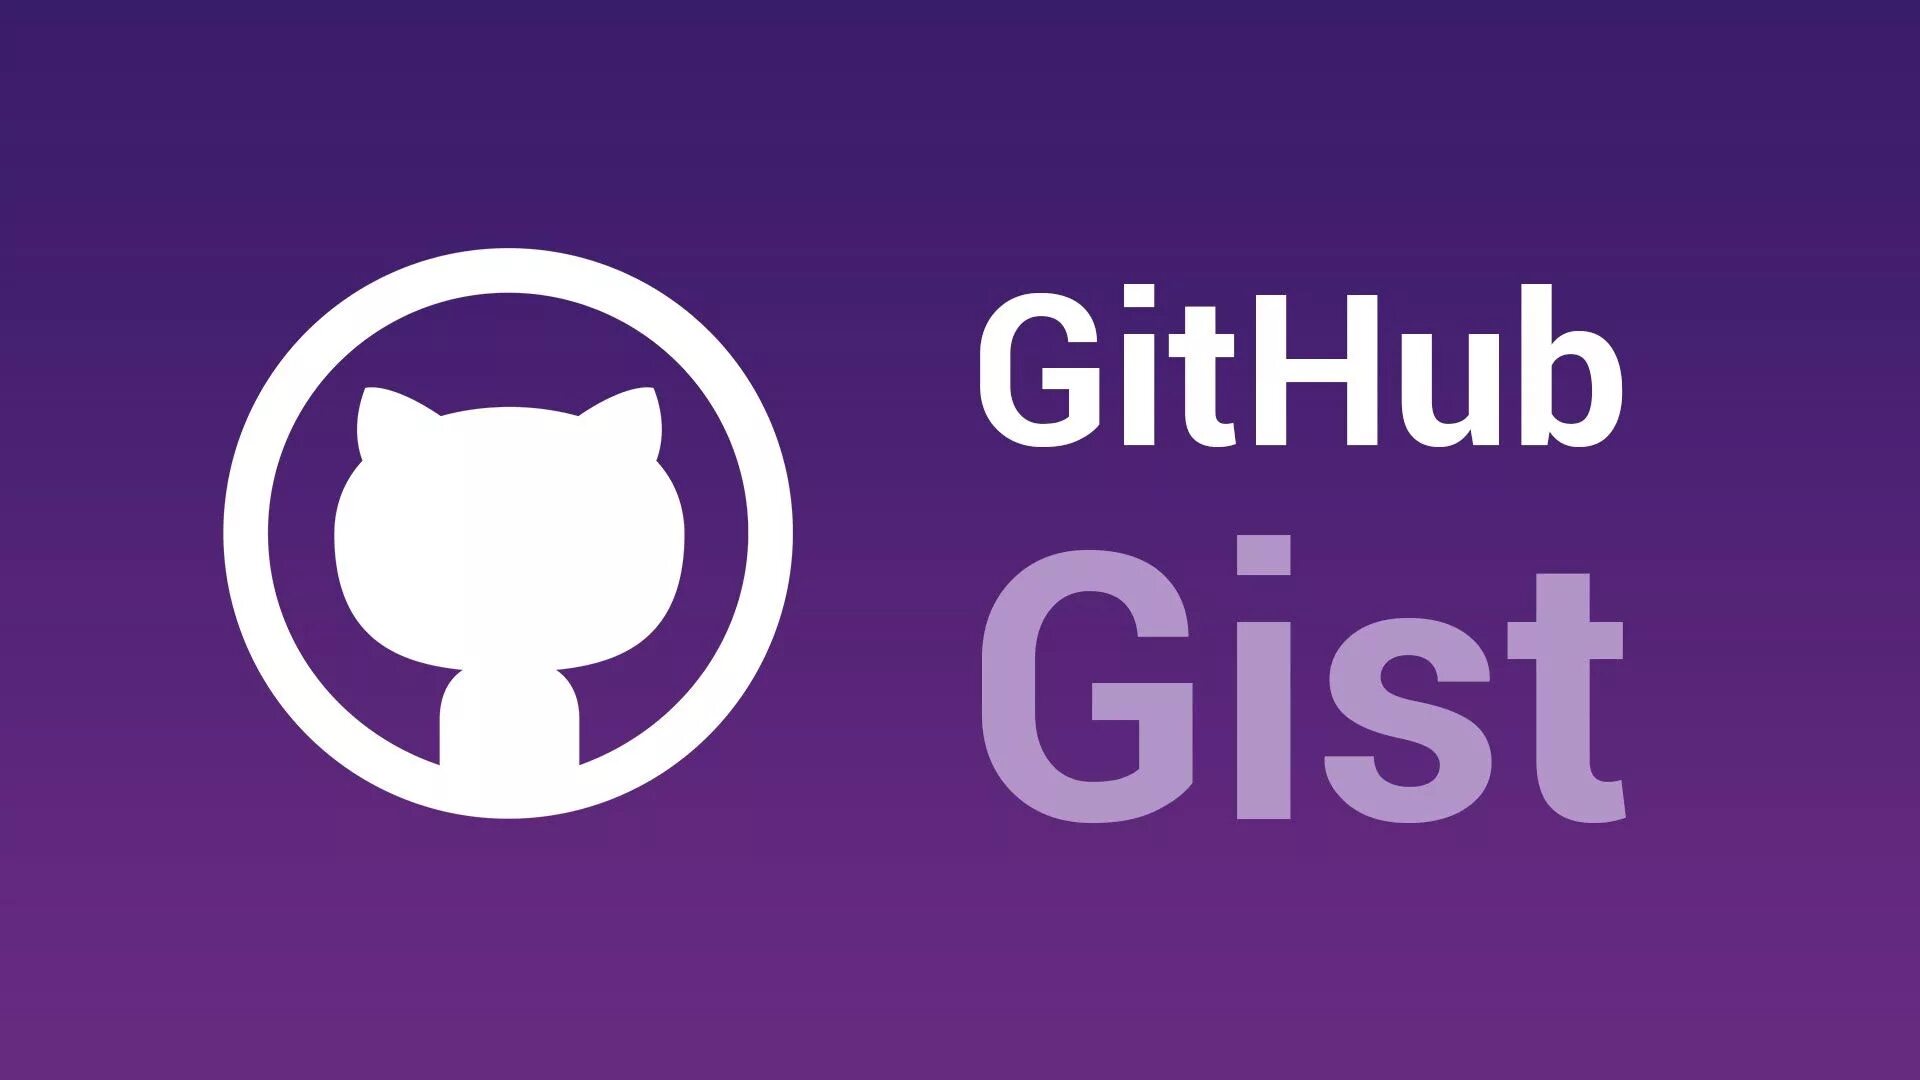 Cs github. GITHUB Gist. GITHUB веб. GITHUB код. GITHUB фон.